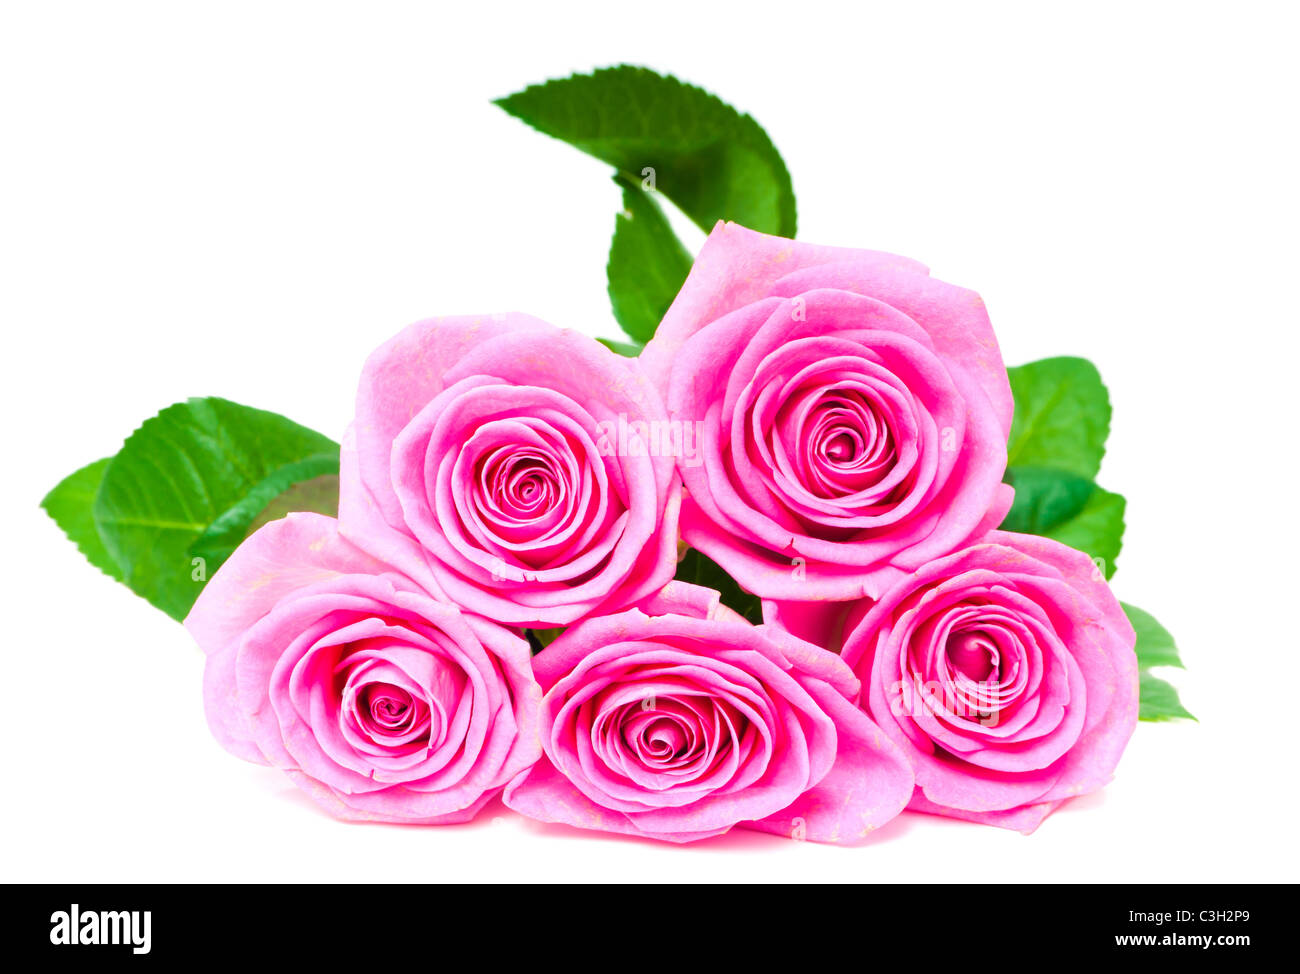 Bouquet di bellissime rose rosa su bianco Foto stock - Alamy